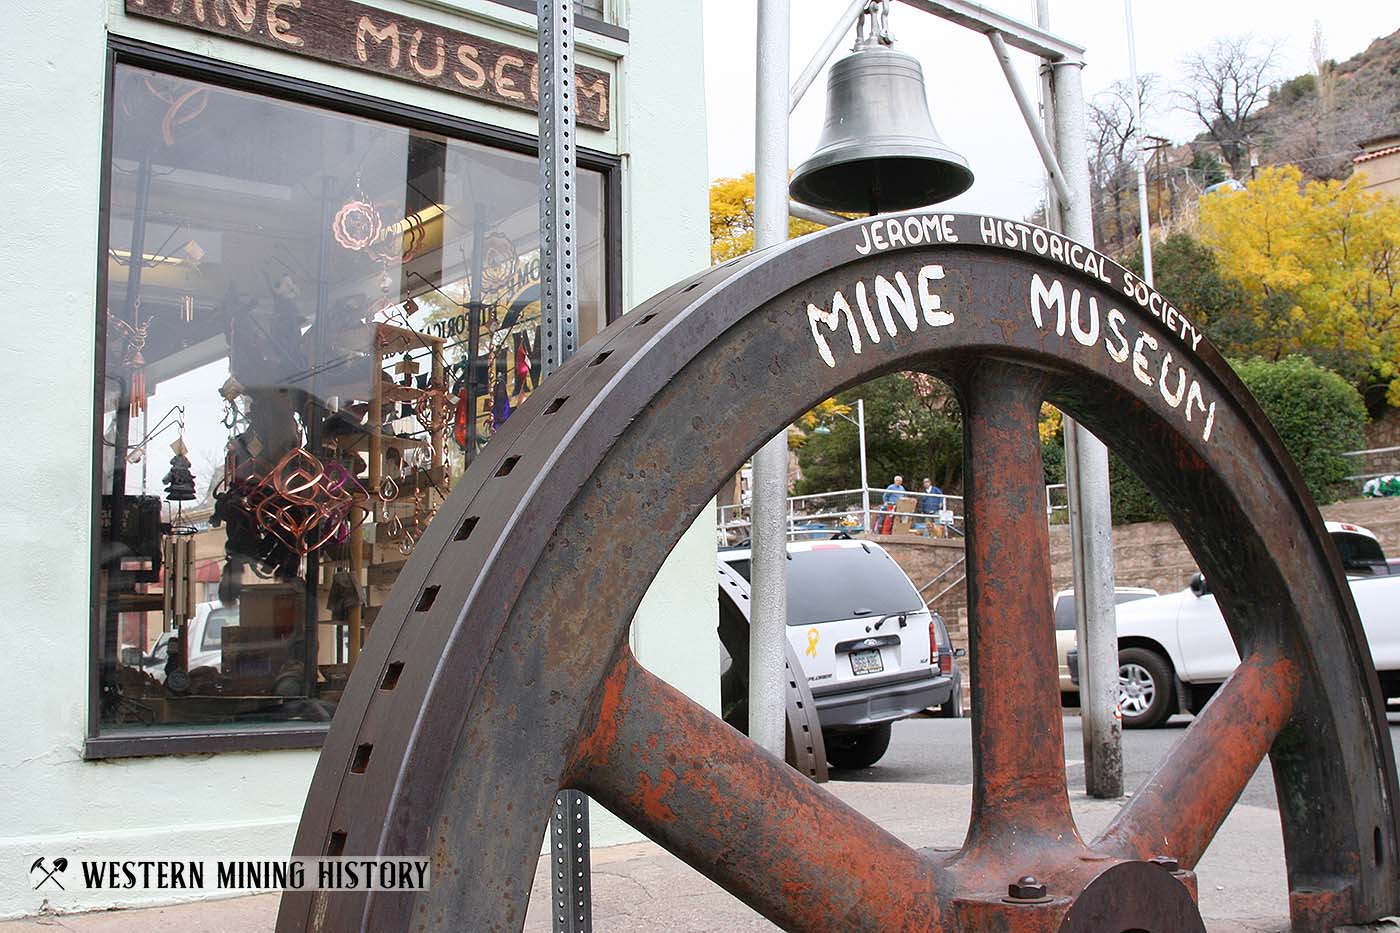 Mining Museum - Jerome